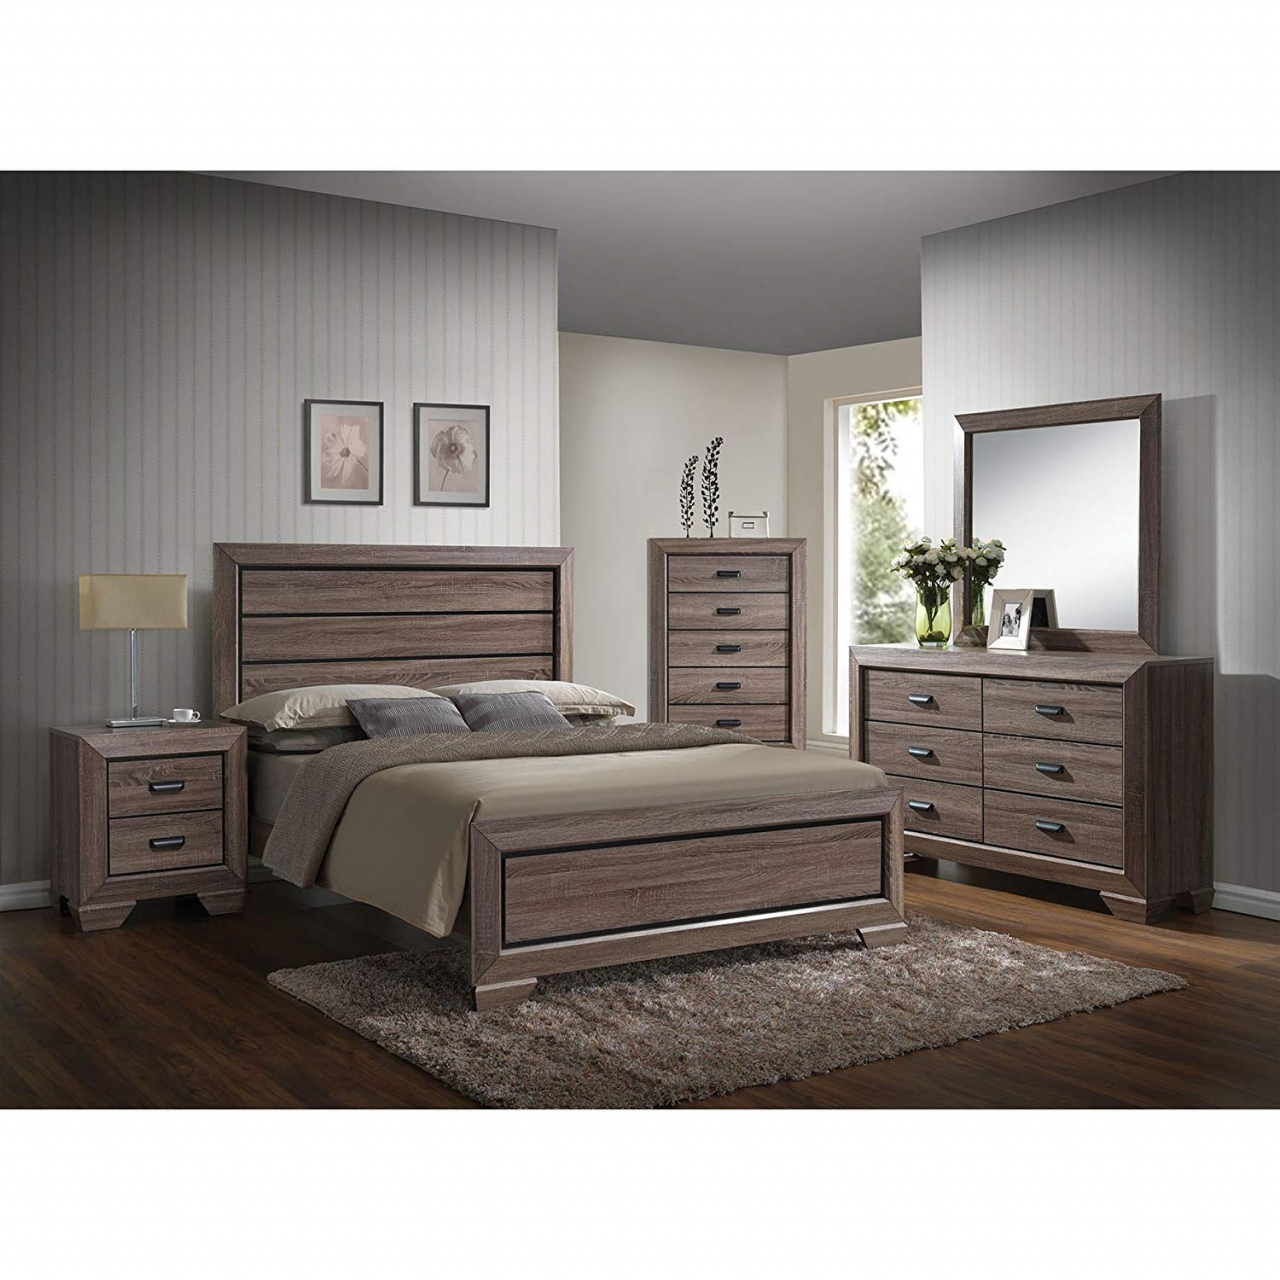 Sam Levitz Queen Bedroom Sets Culverbach Bedroom Set Modern King inside size 1280 X 1280